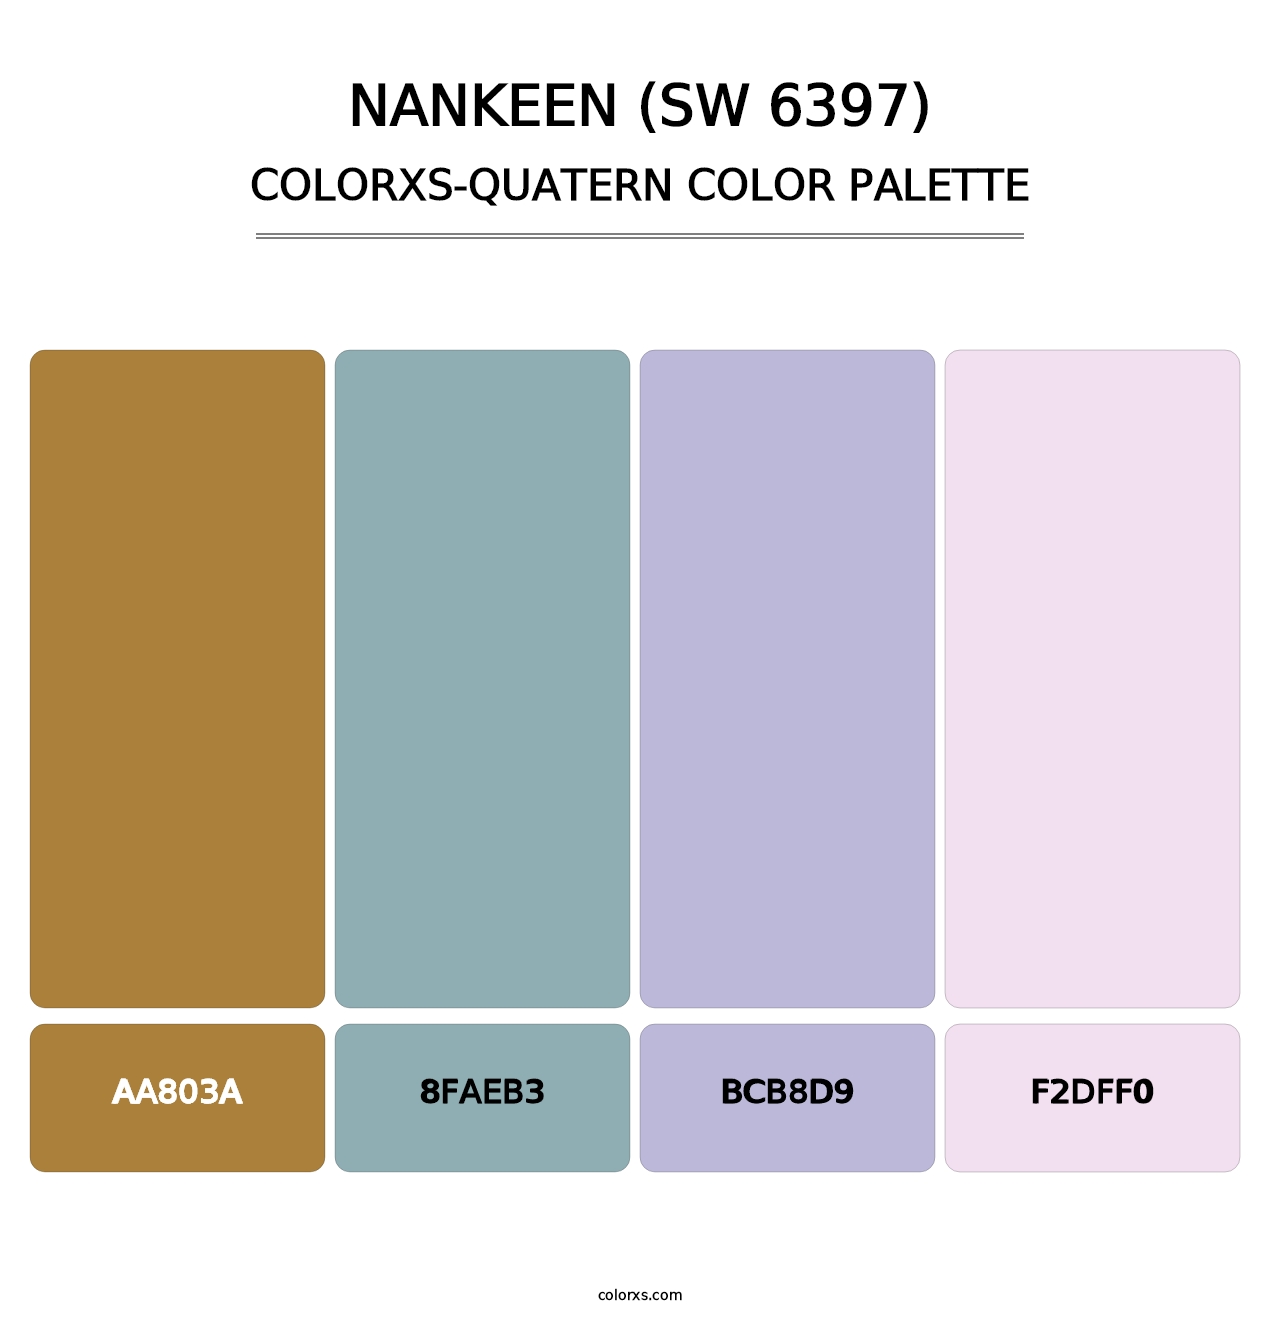 Nankeen (SW 6397) - Colorxs Quatern Palette